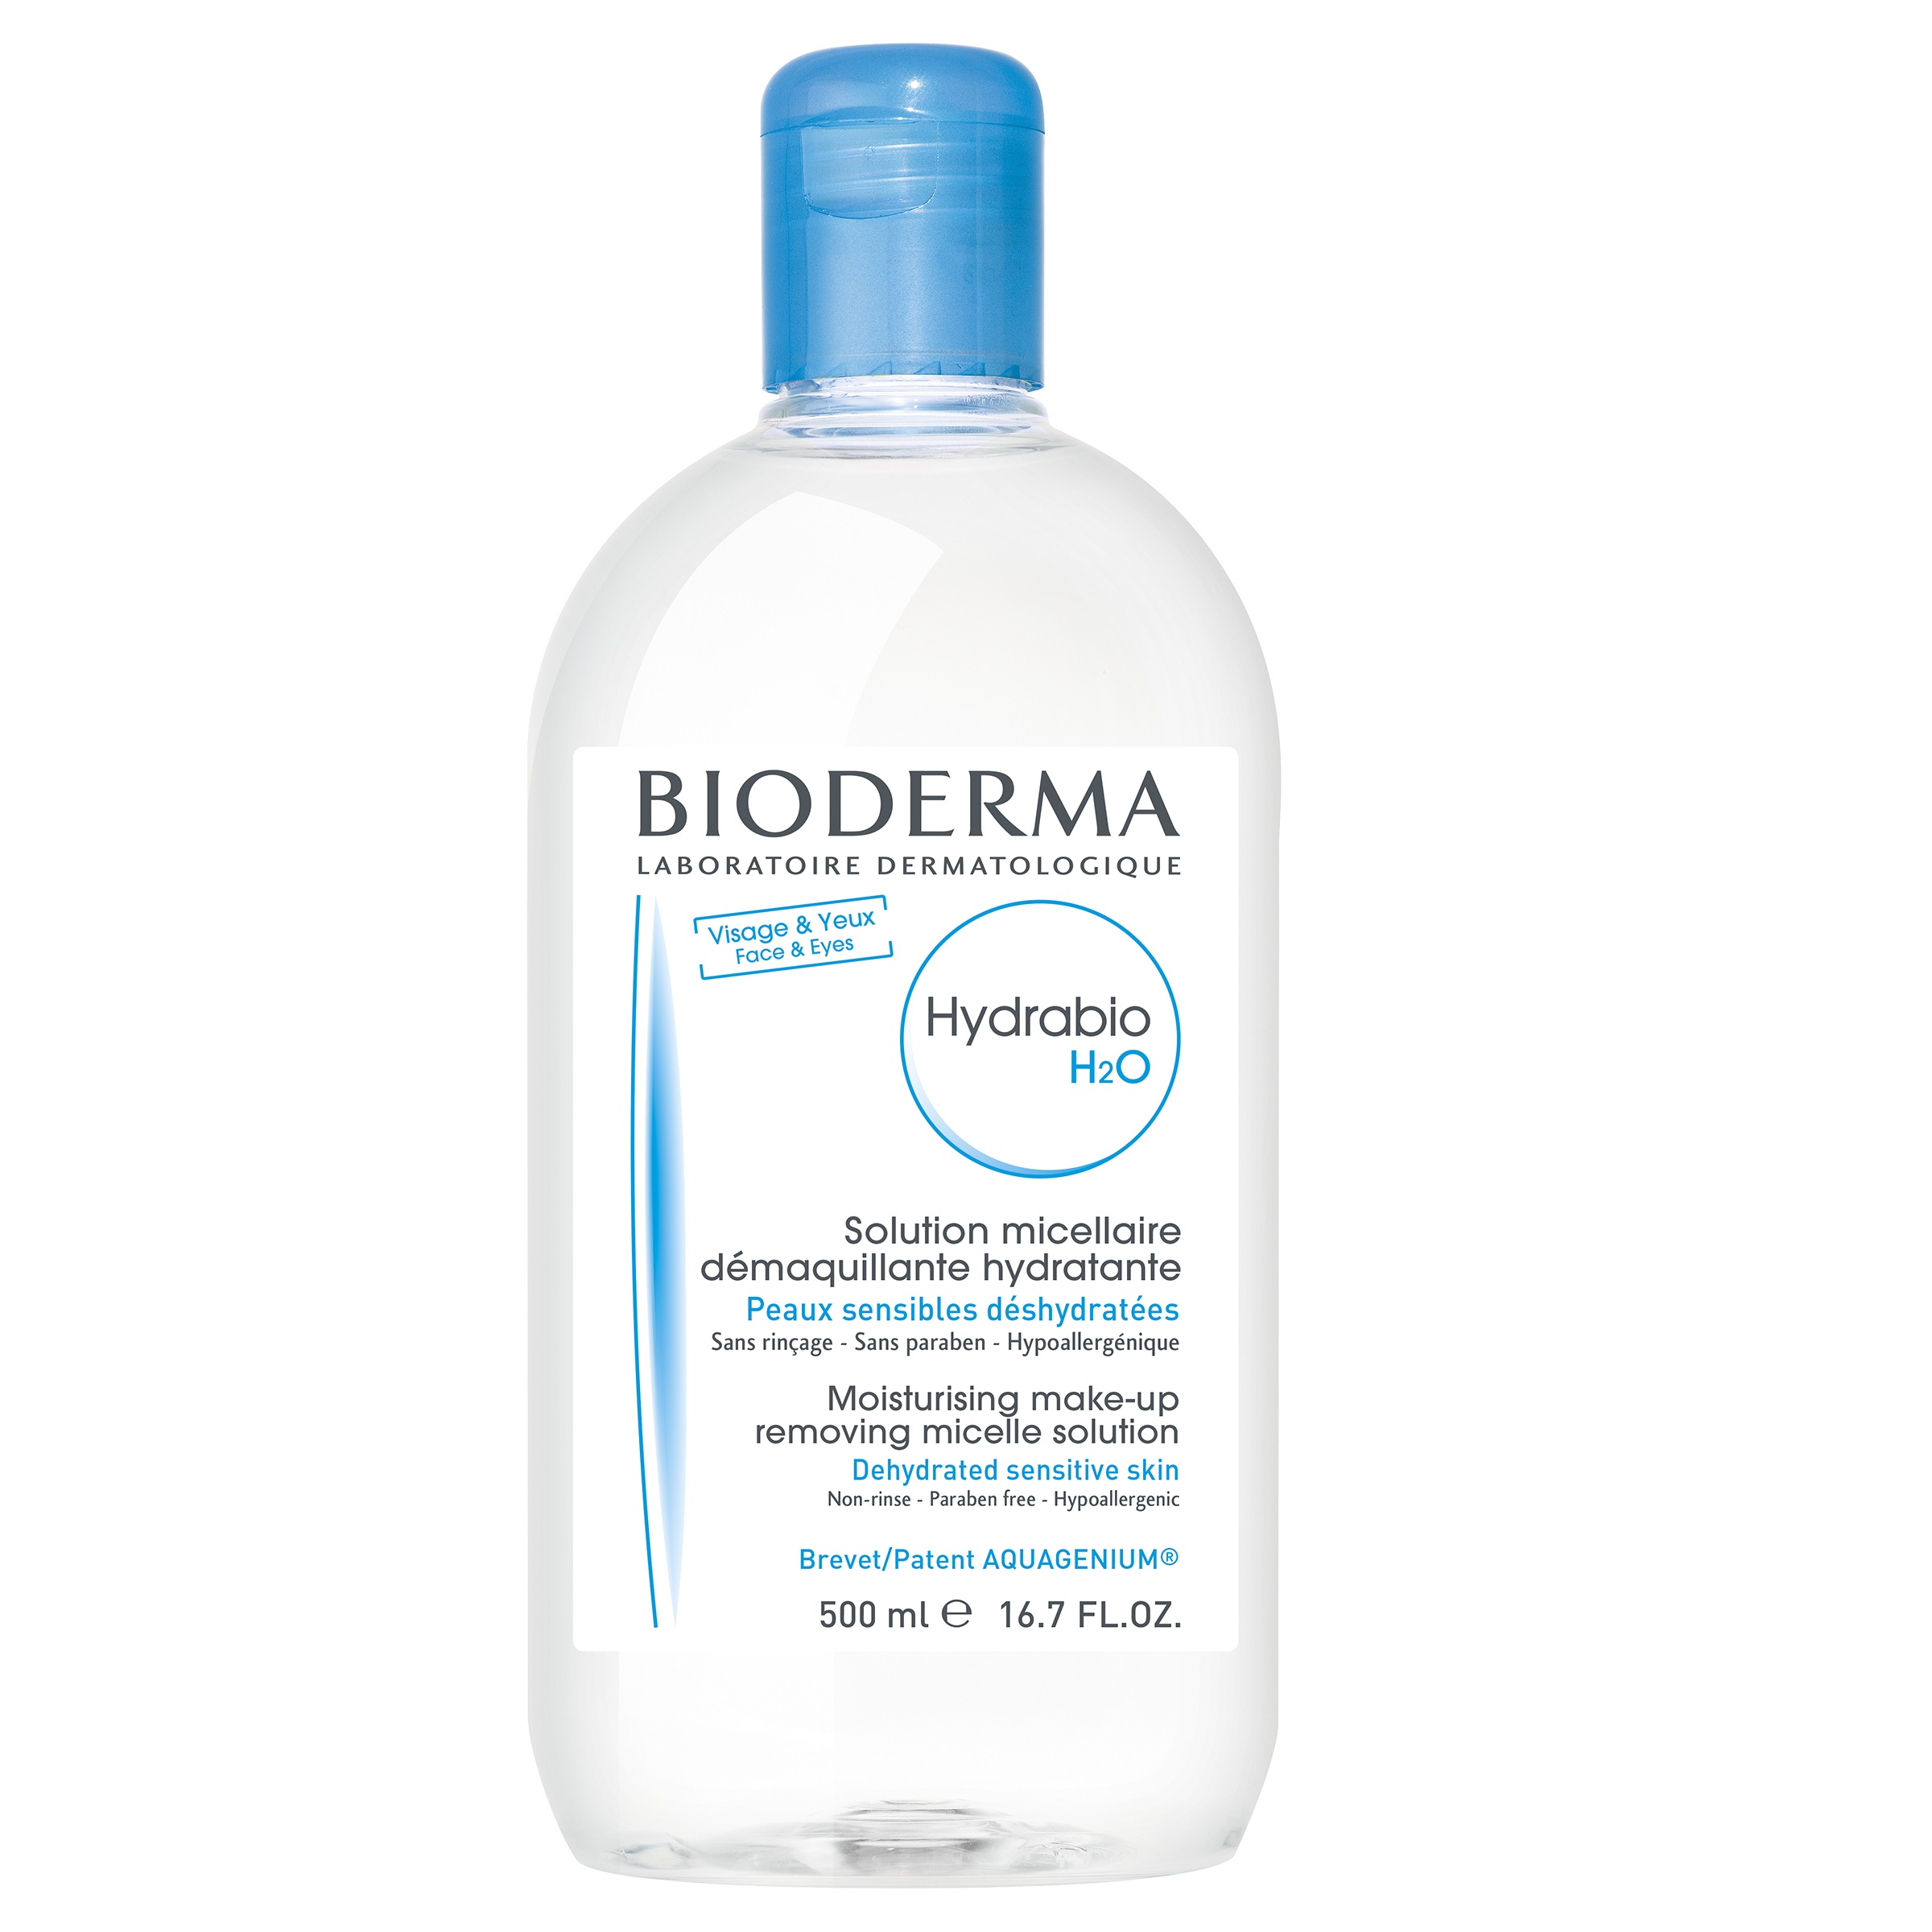 Lotiune micelara - Bioderma Hydrabio H2O solutie micelara hidratanta x 500ml, medik-on.ro